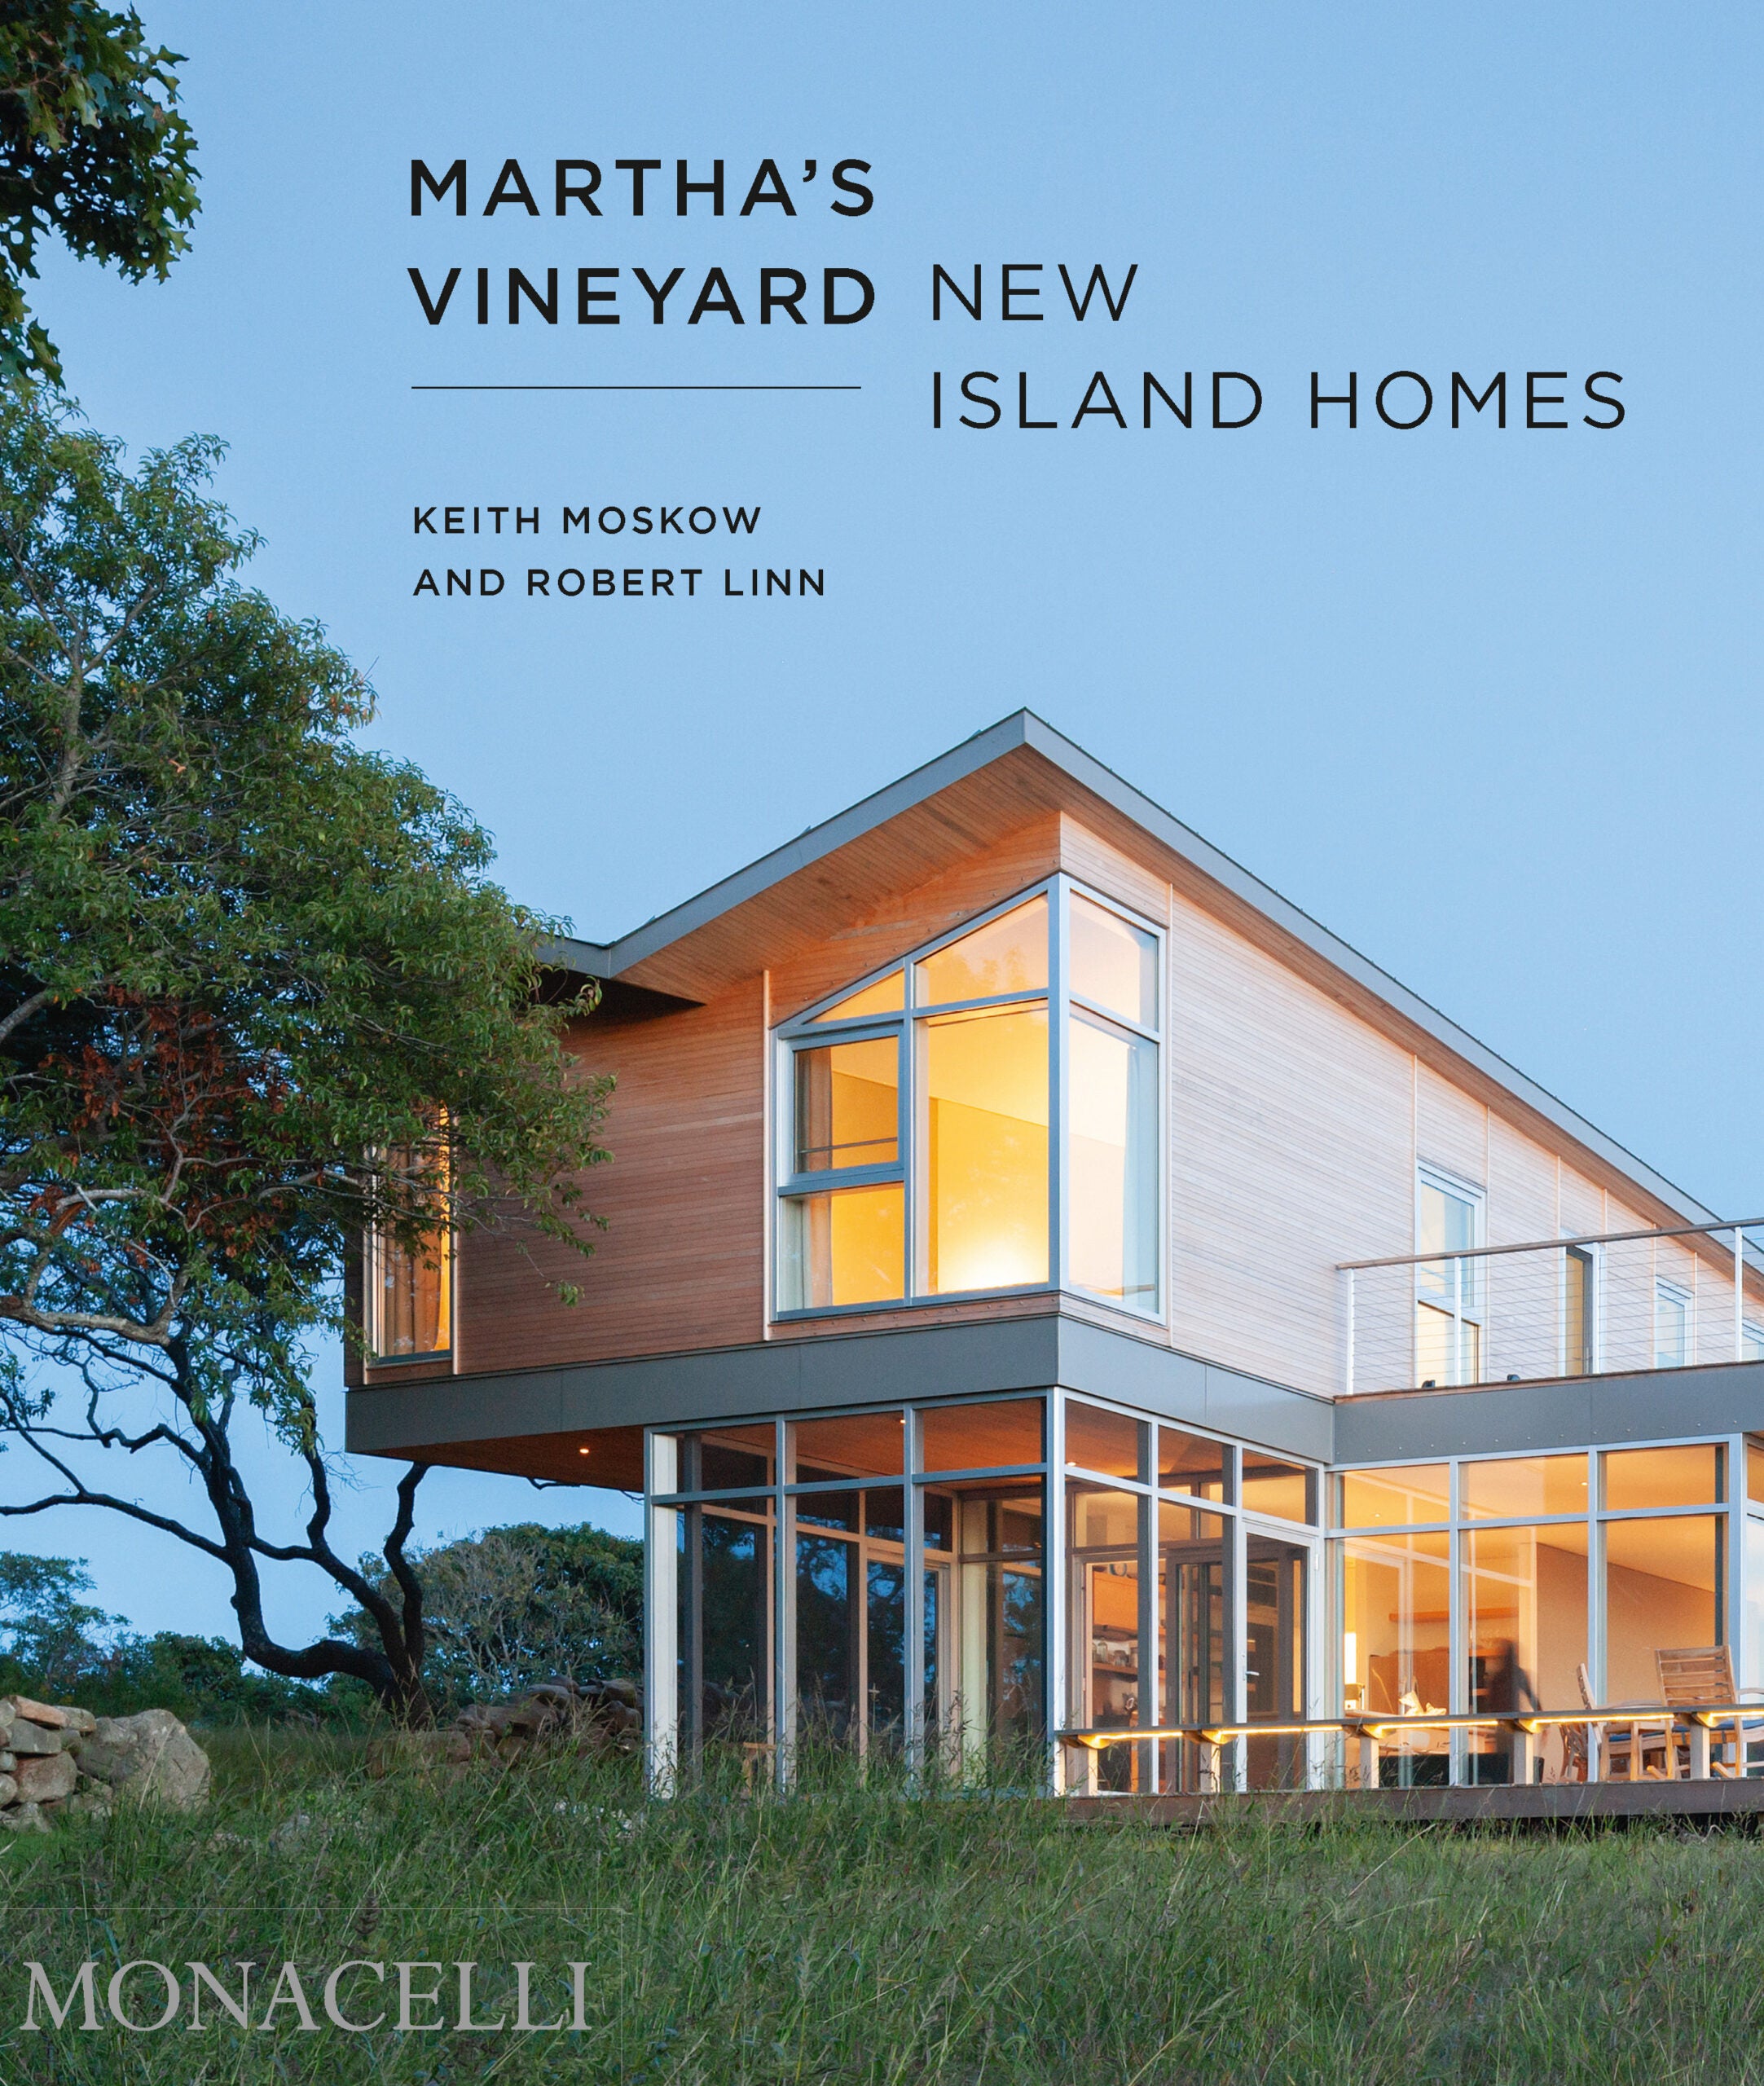 https://bdc2020.o0bc.com/wp-content/uploads/2021/05/marthas-vineyard-new-island-homes-cover-scaled-1-630846942496c.jpg